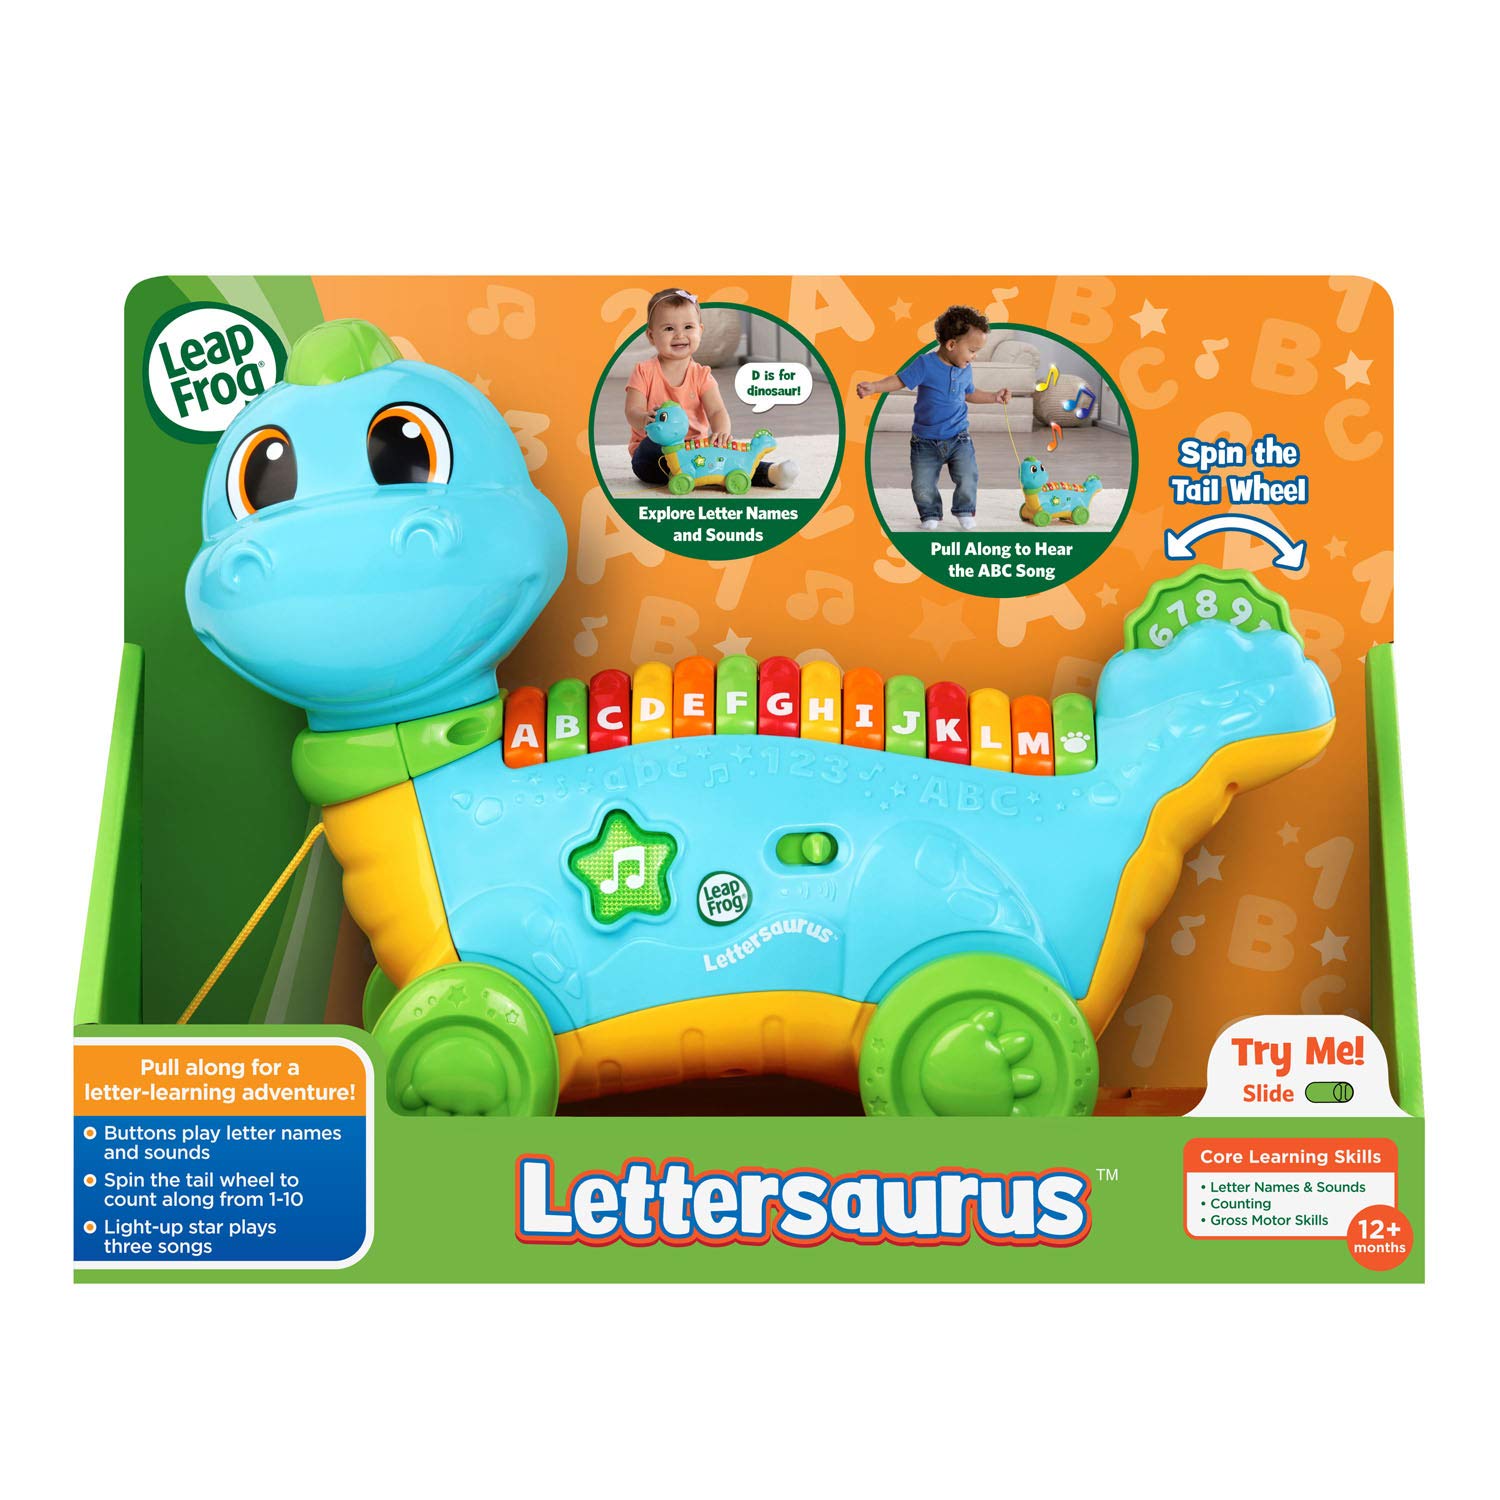 Lettersaurus